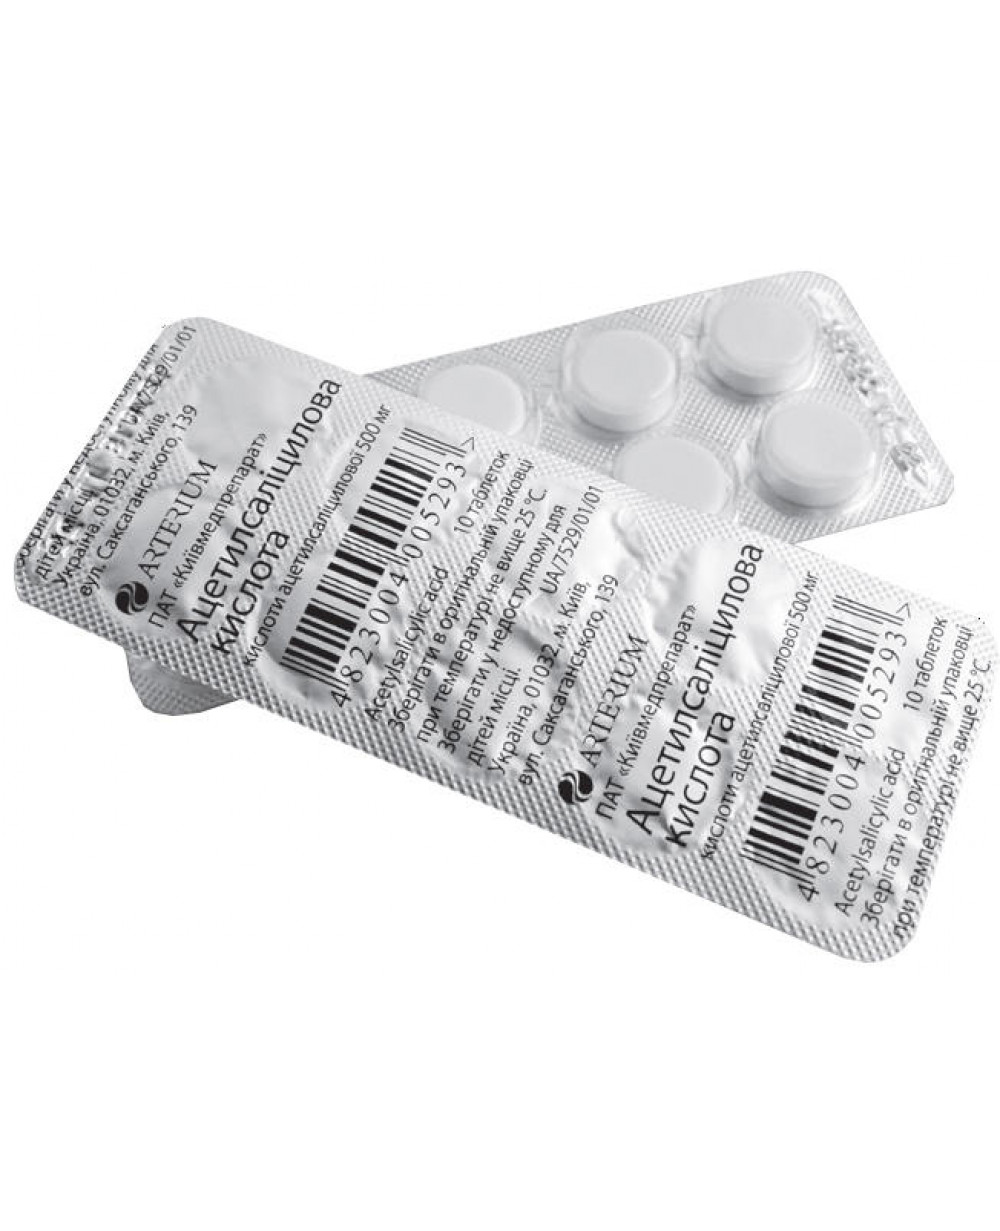 2750 БОЛ-РАН® НЕО - Paracetamol, combinations excl. psycholeptics